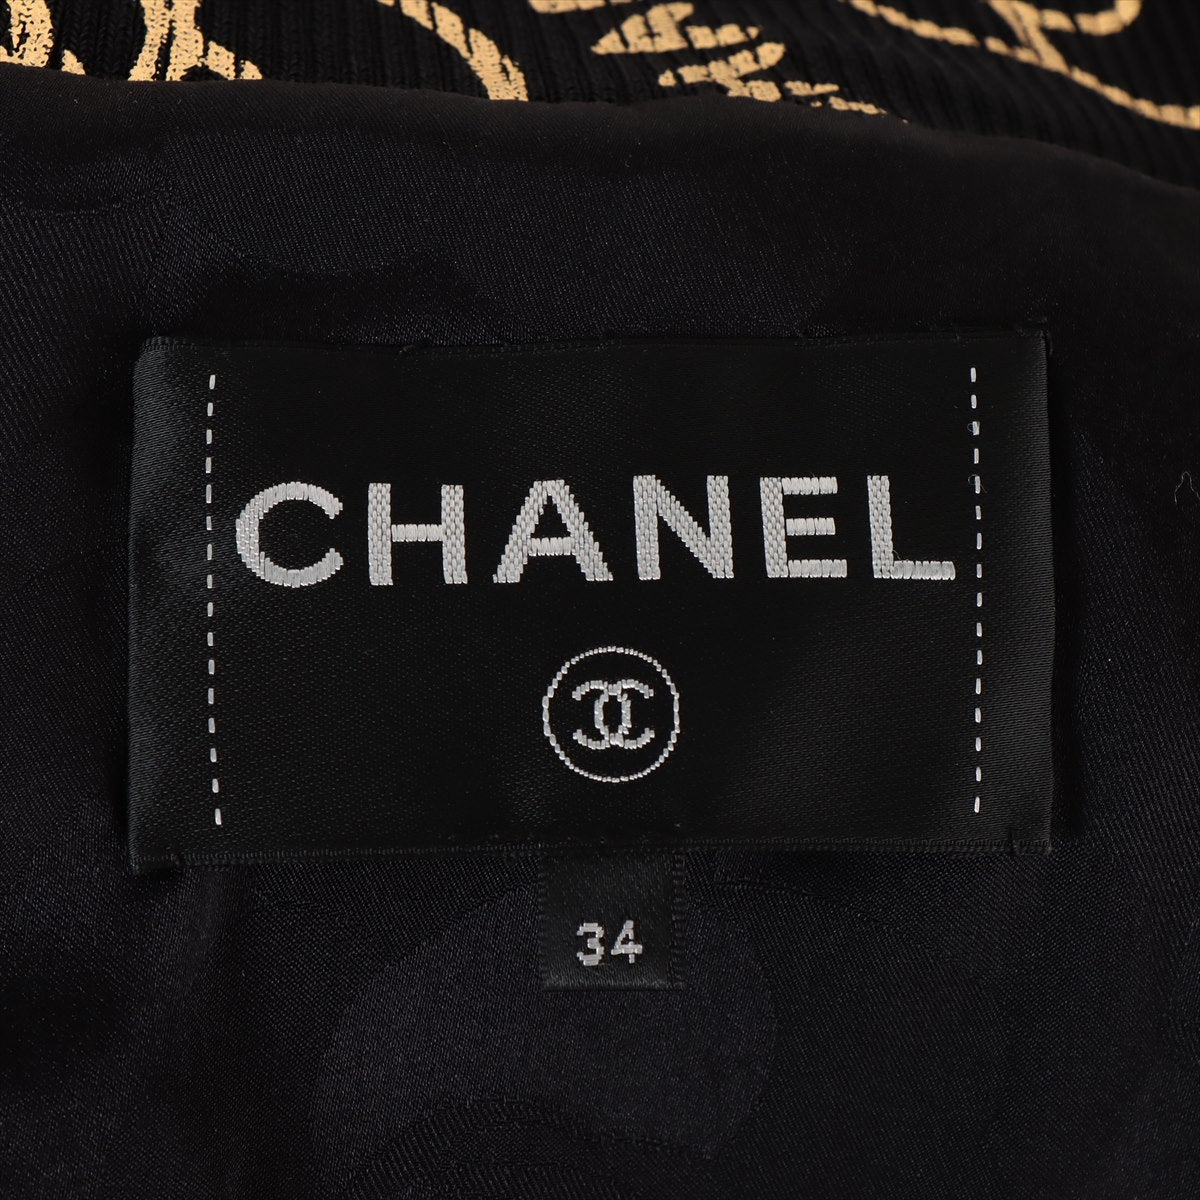 Chanel Coco Mark P61 Ram leather Leather jacket 34 Ladies' Black×Gold  P61925 Métiers d'art